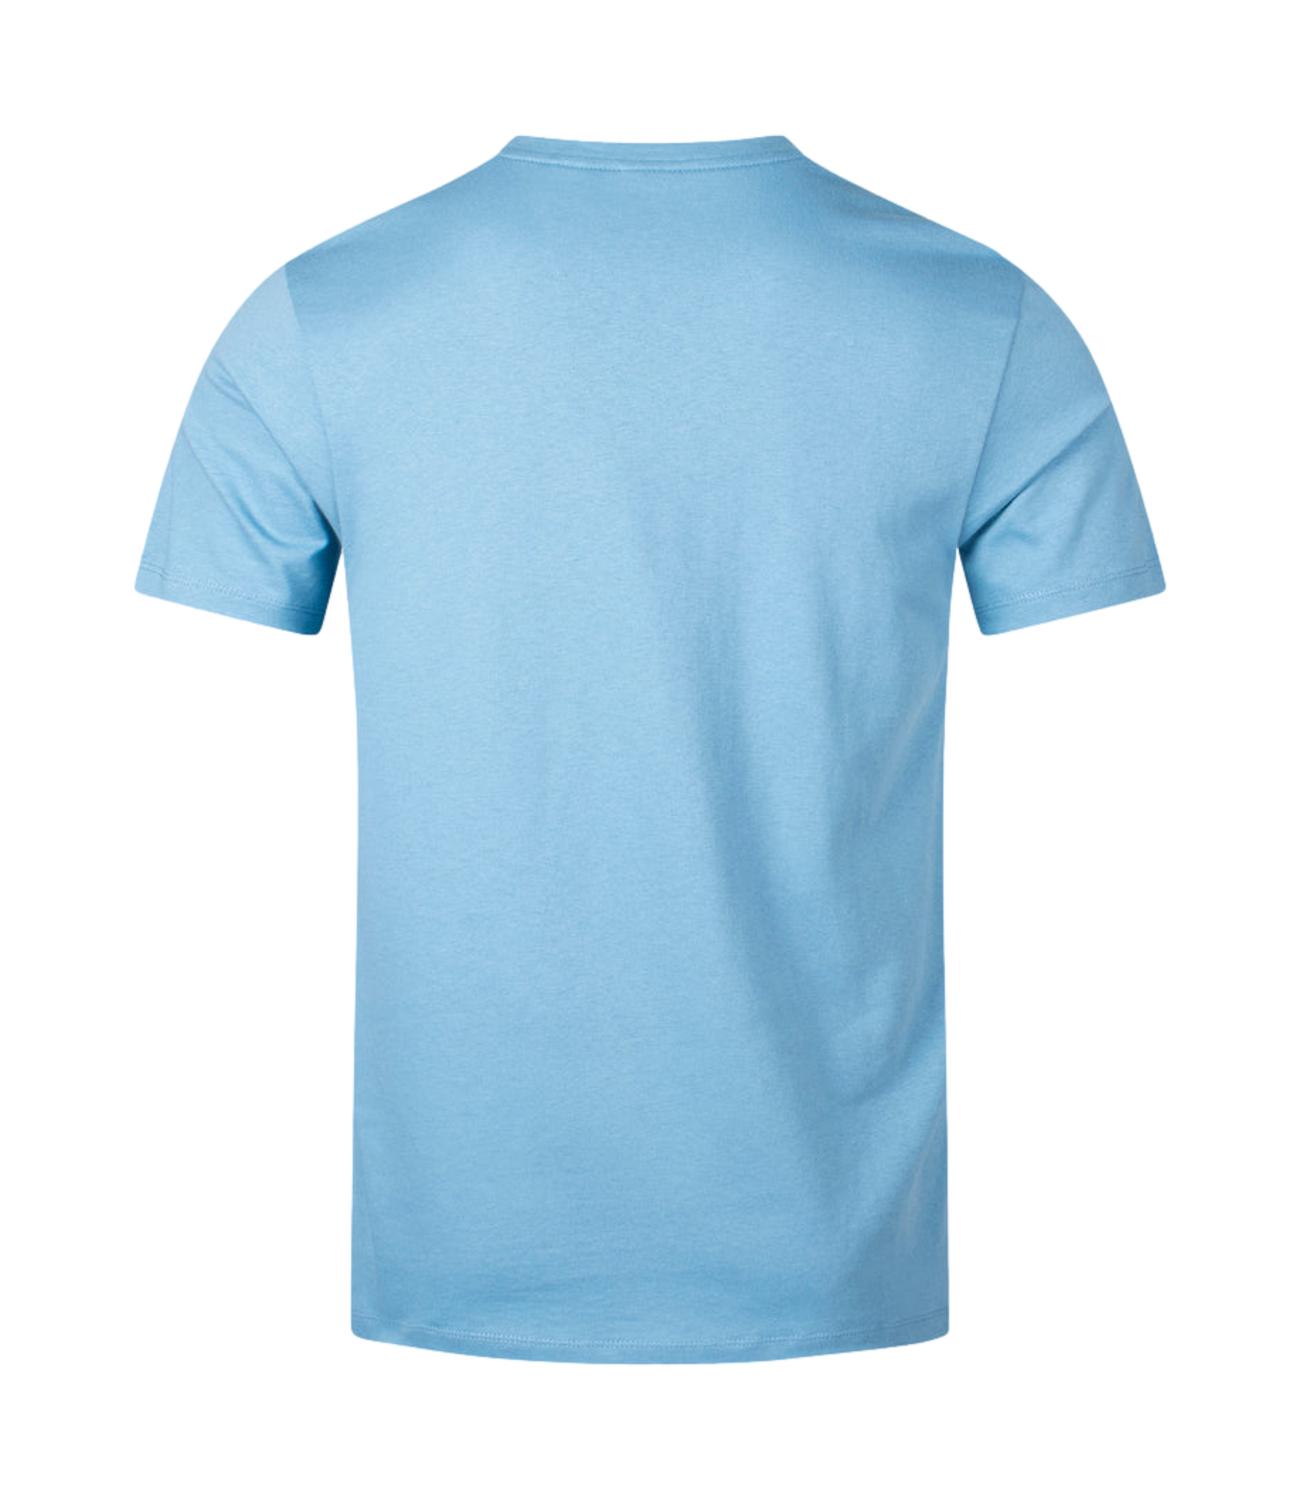 T-shirt Hugo Boss azzurro uomo